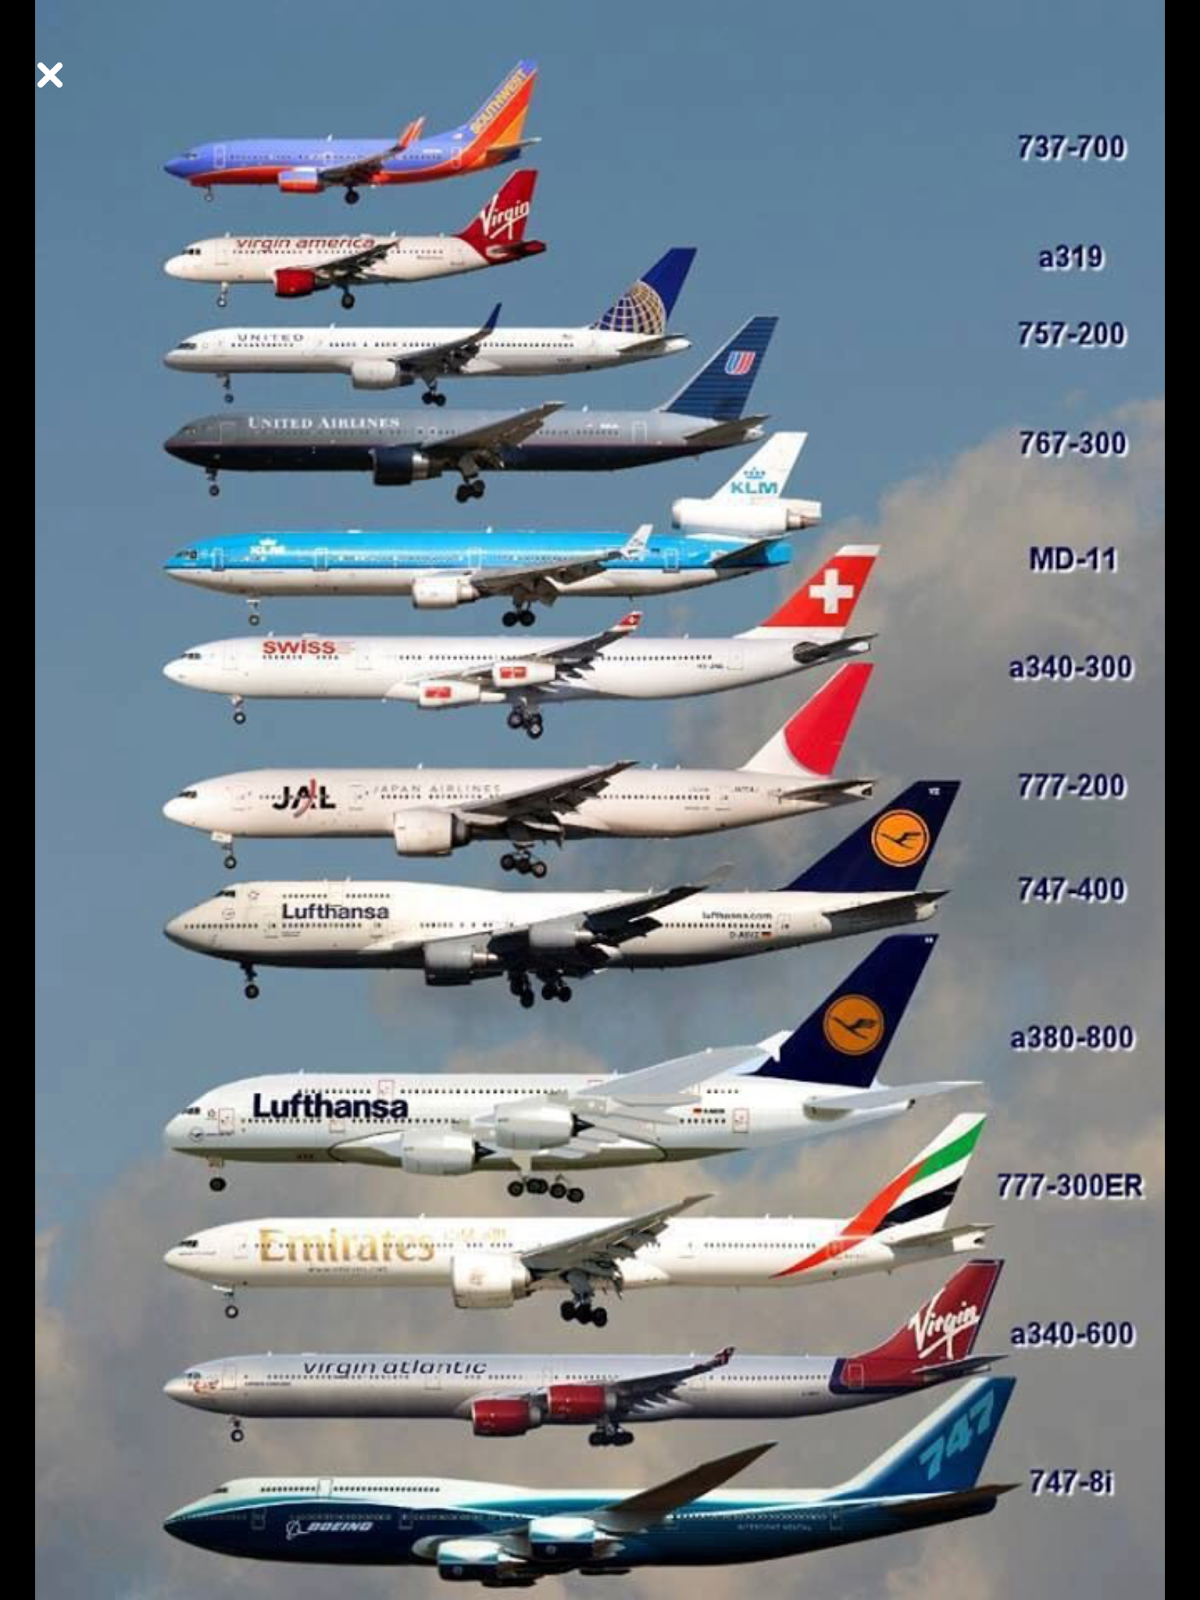 Boeing Plane Size Chart